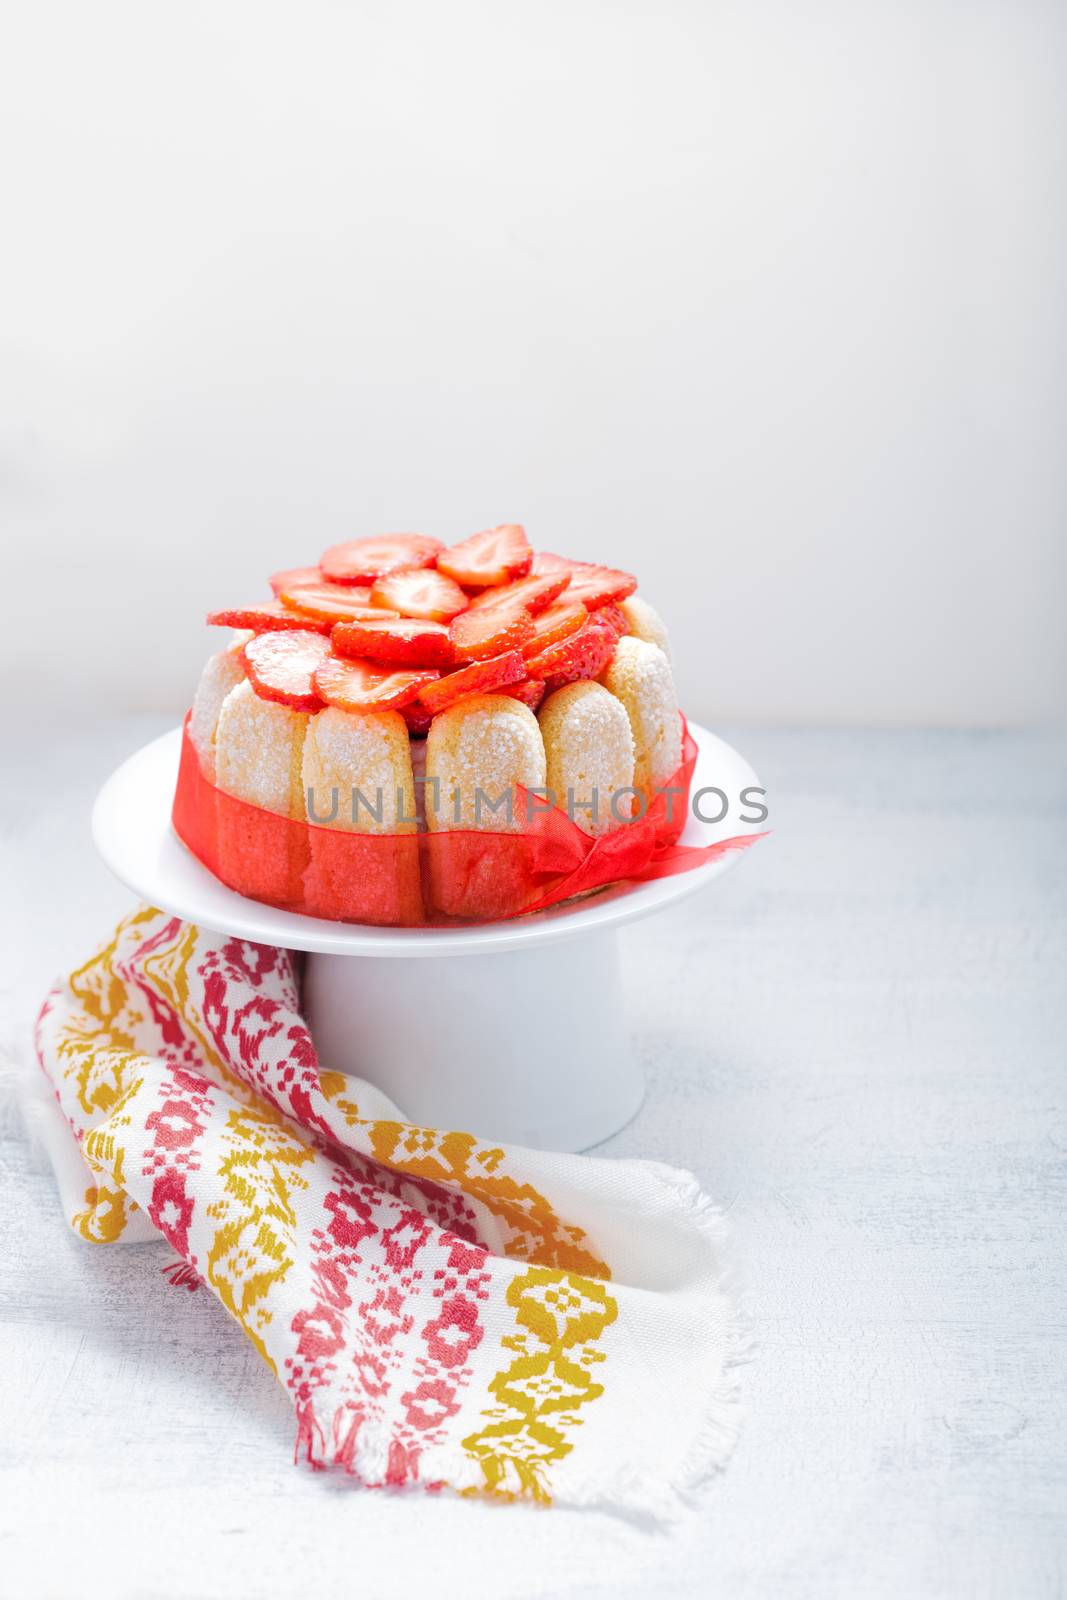 Yogurt strawberry cake with savoiardi biscuits on a white plate